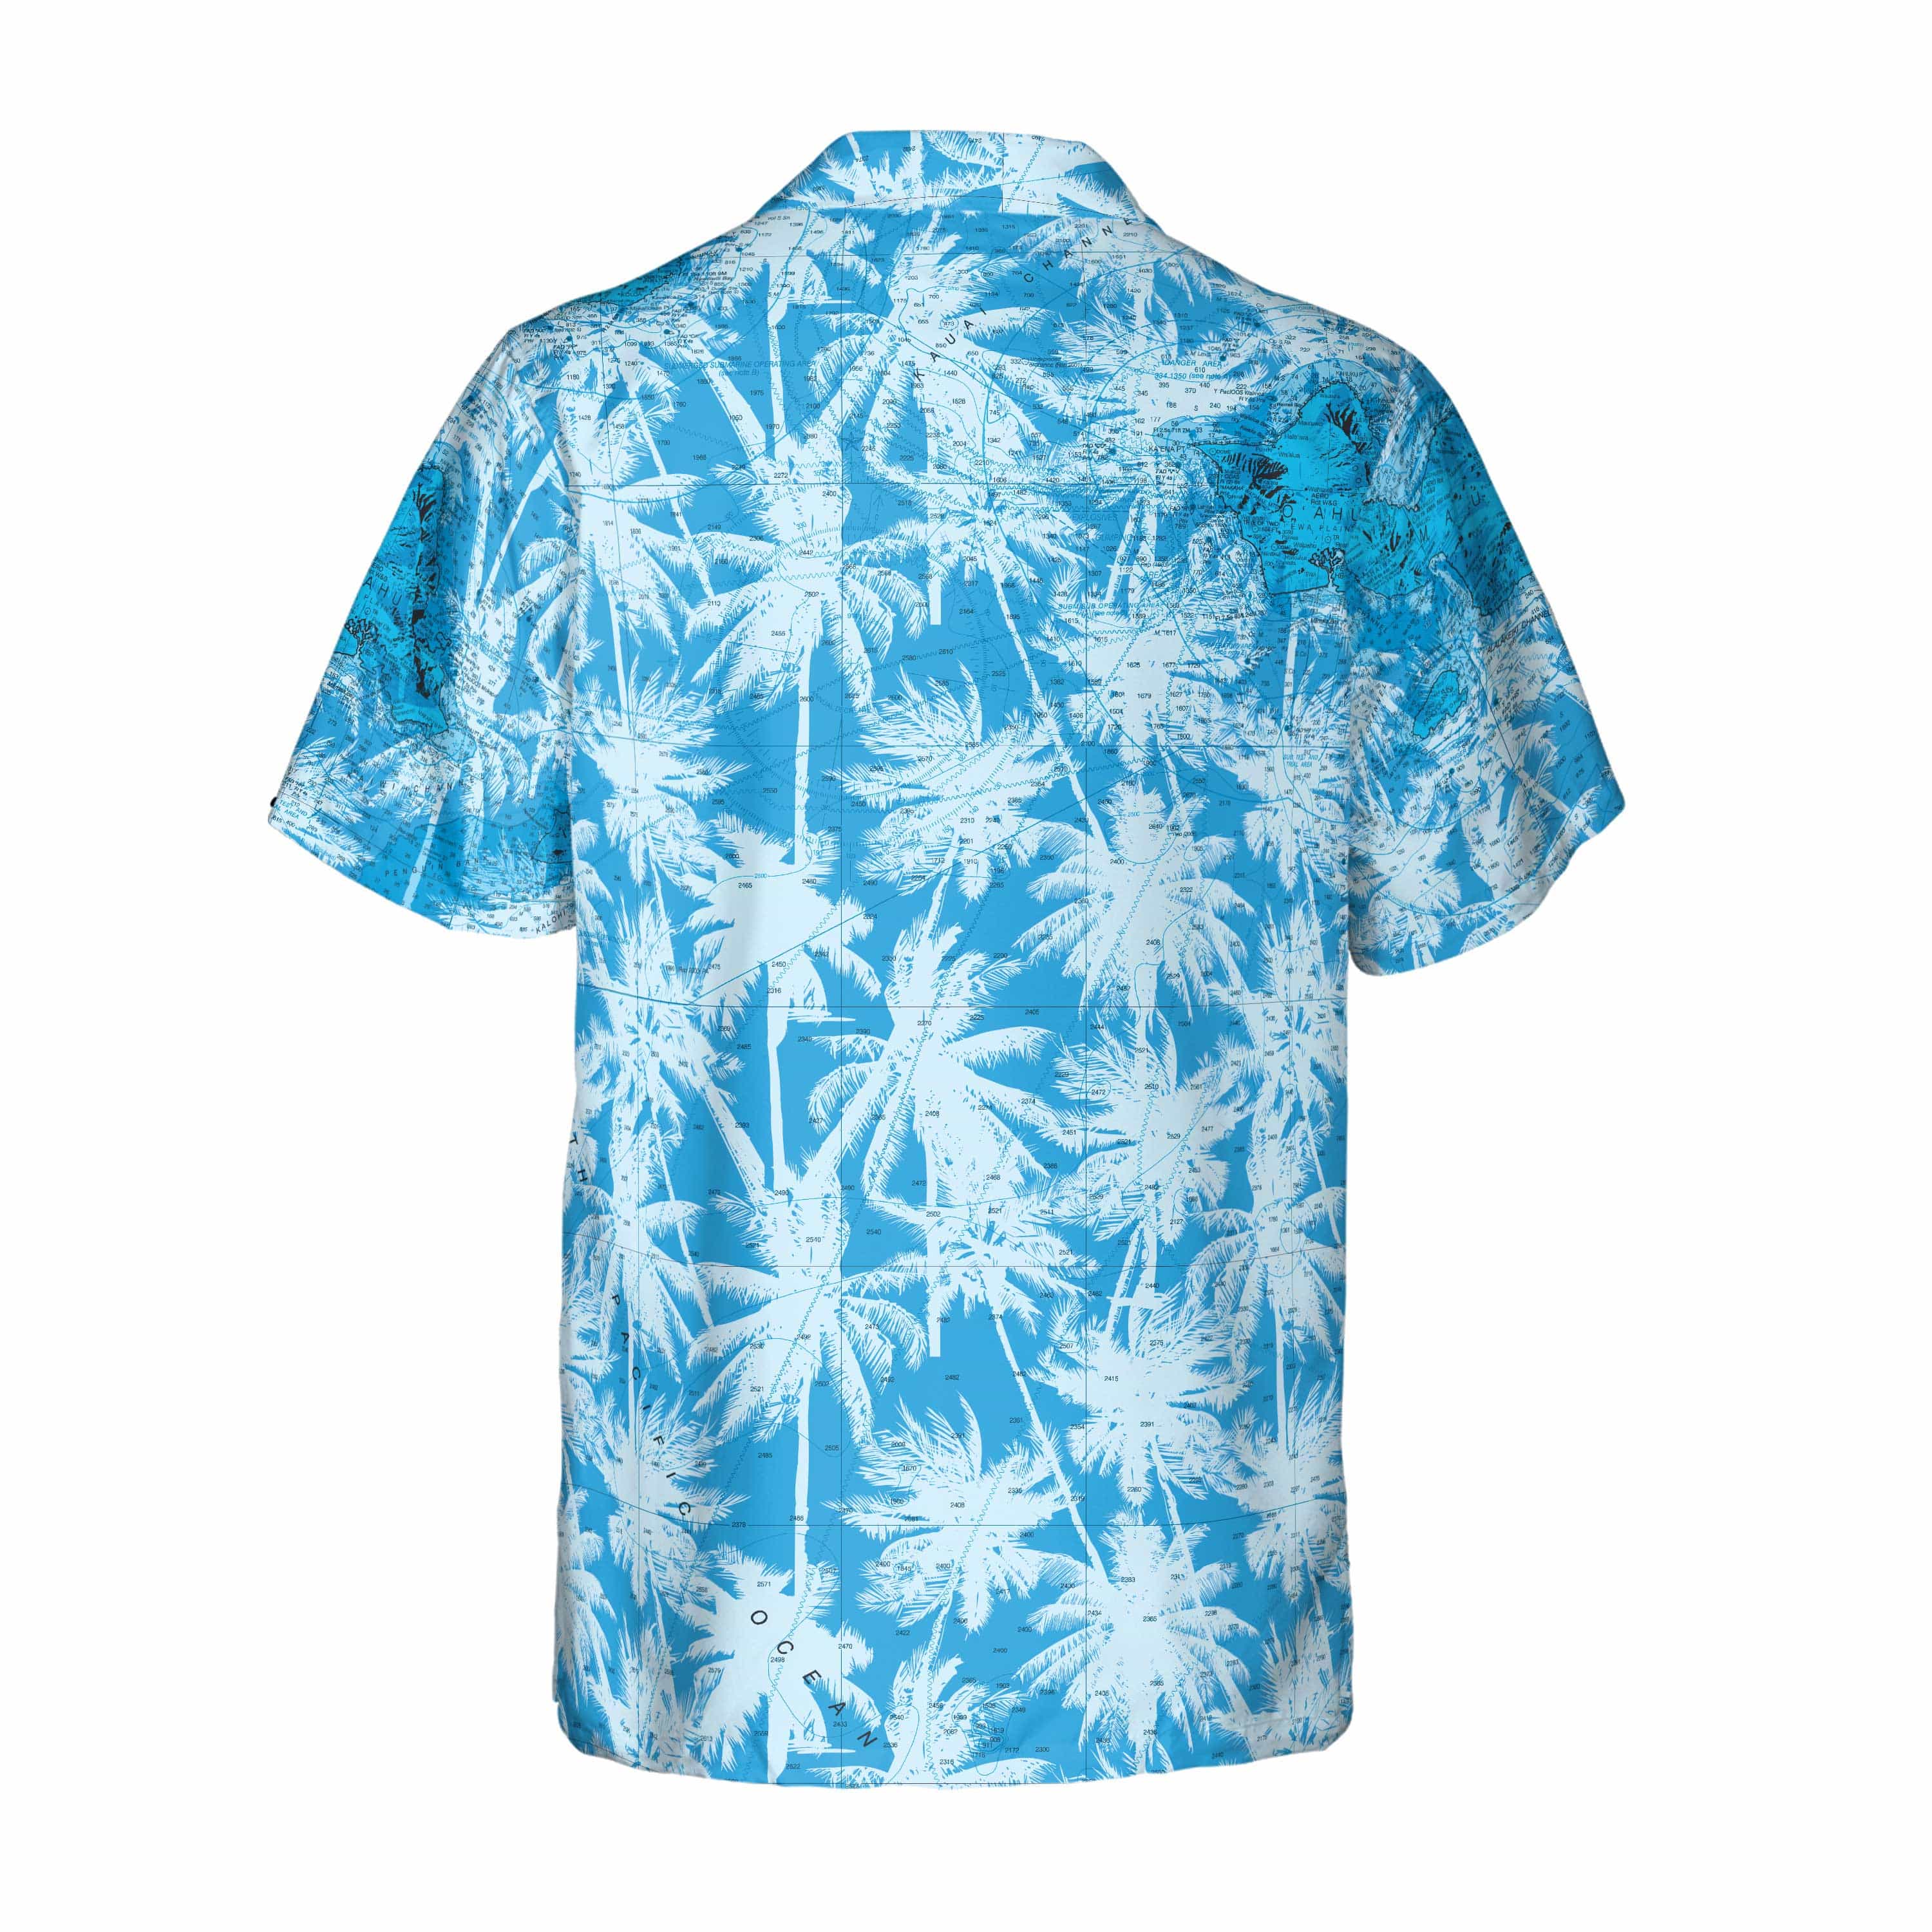 The Breezes Through Hawaii Camp Shirt